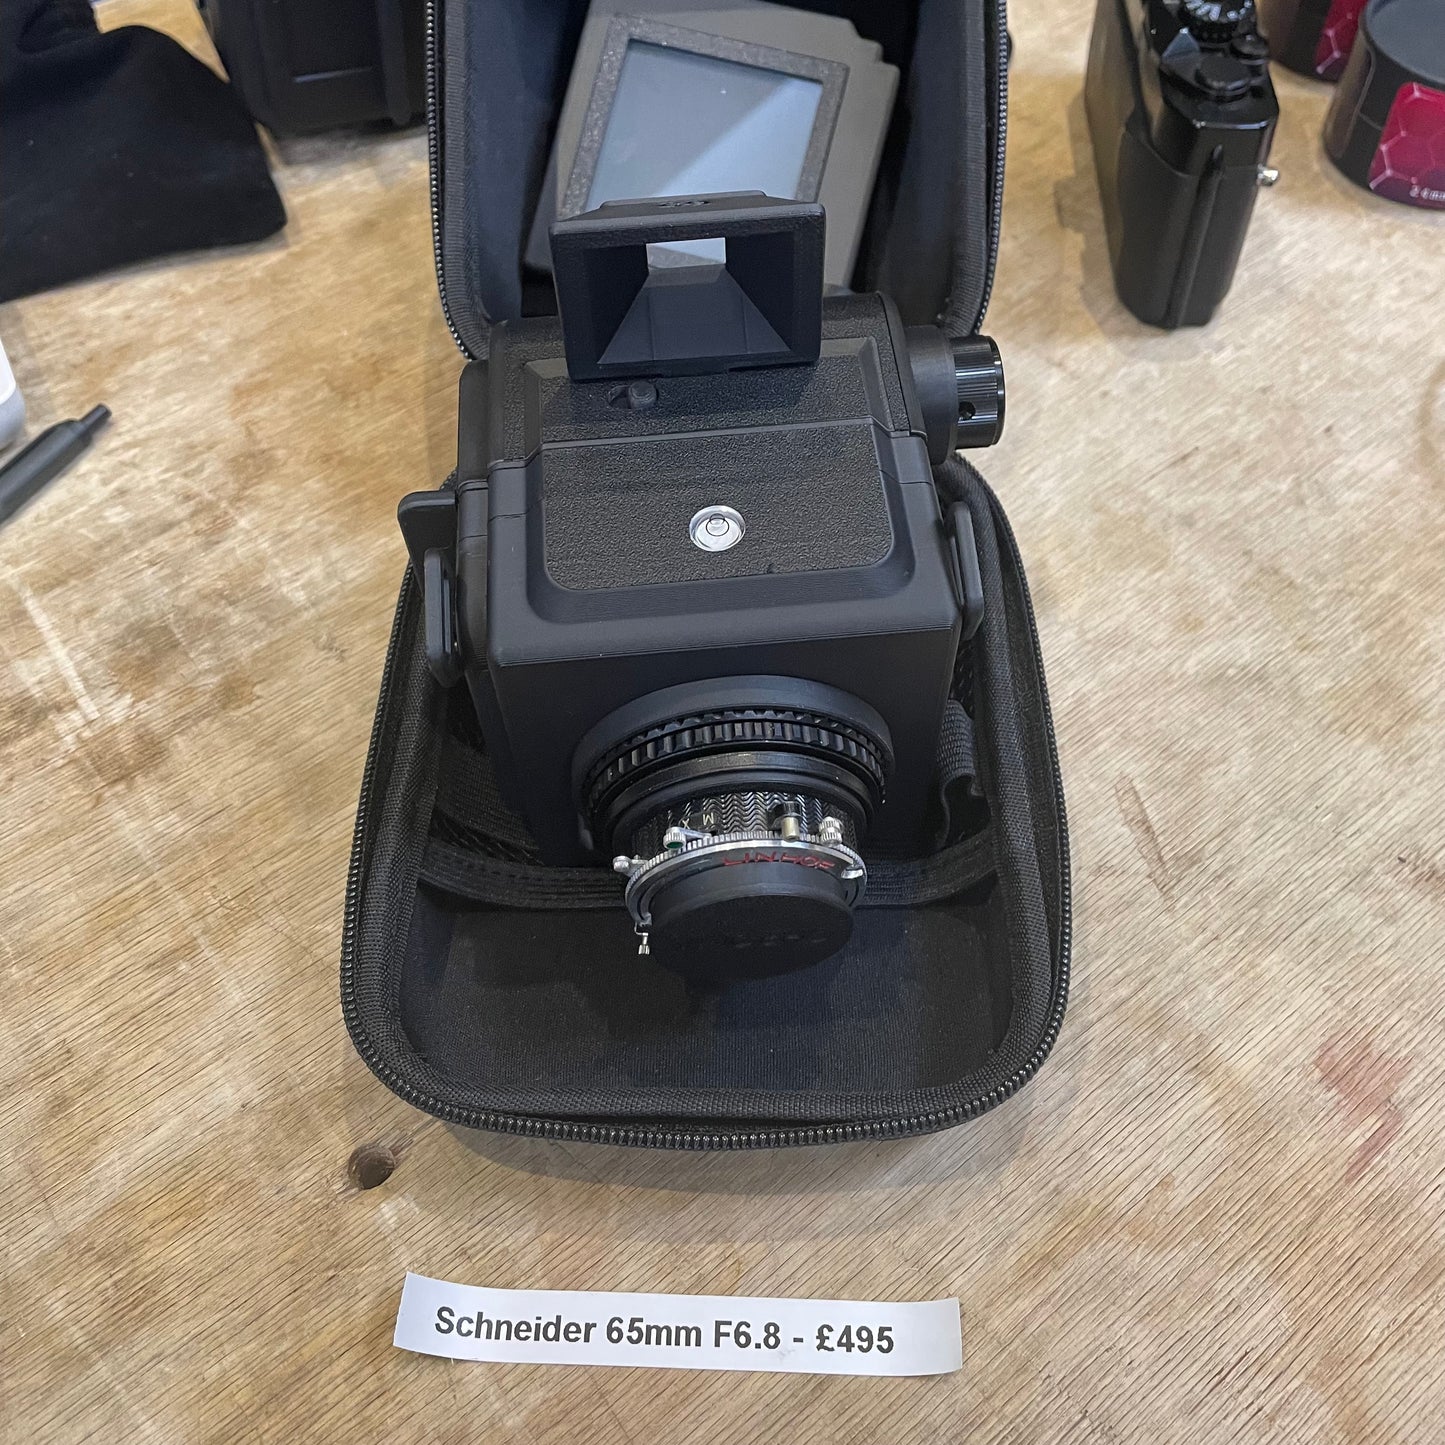 6x6 Medium Format System with Linhof/Schneider 65mm F6.8 lens